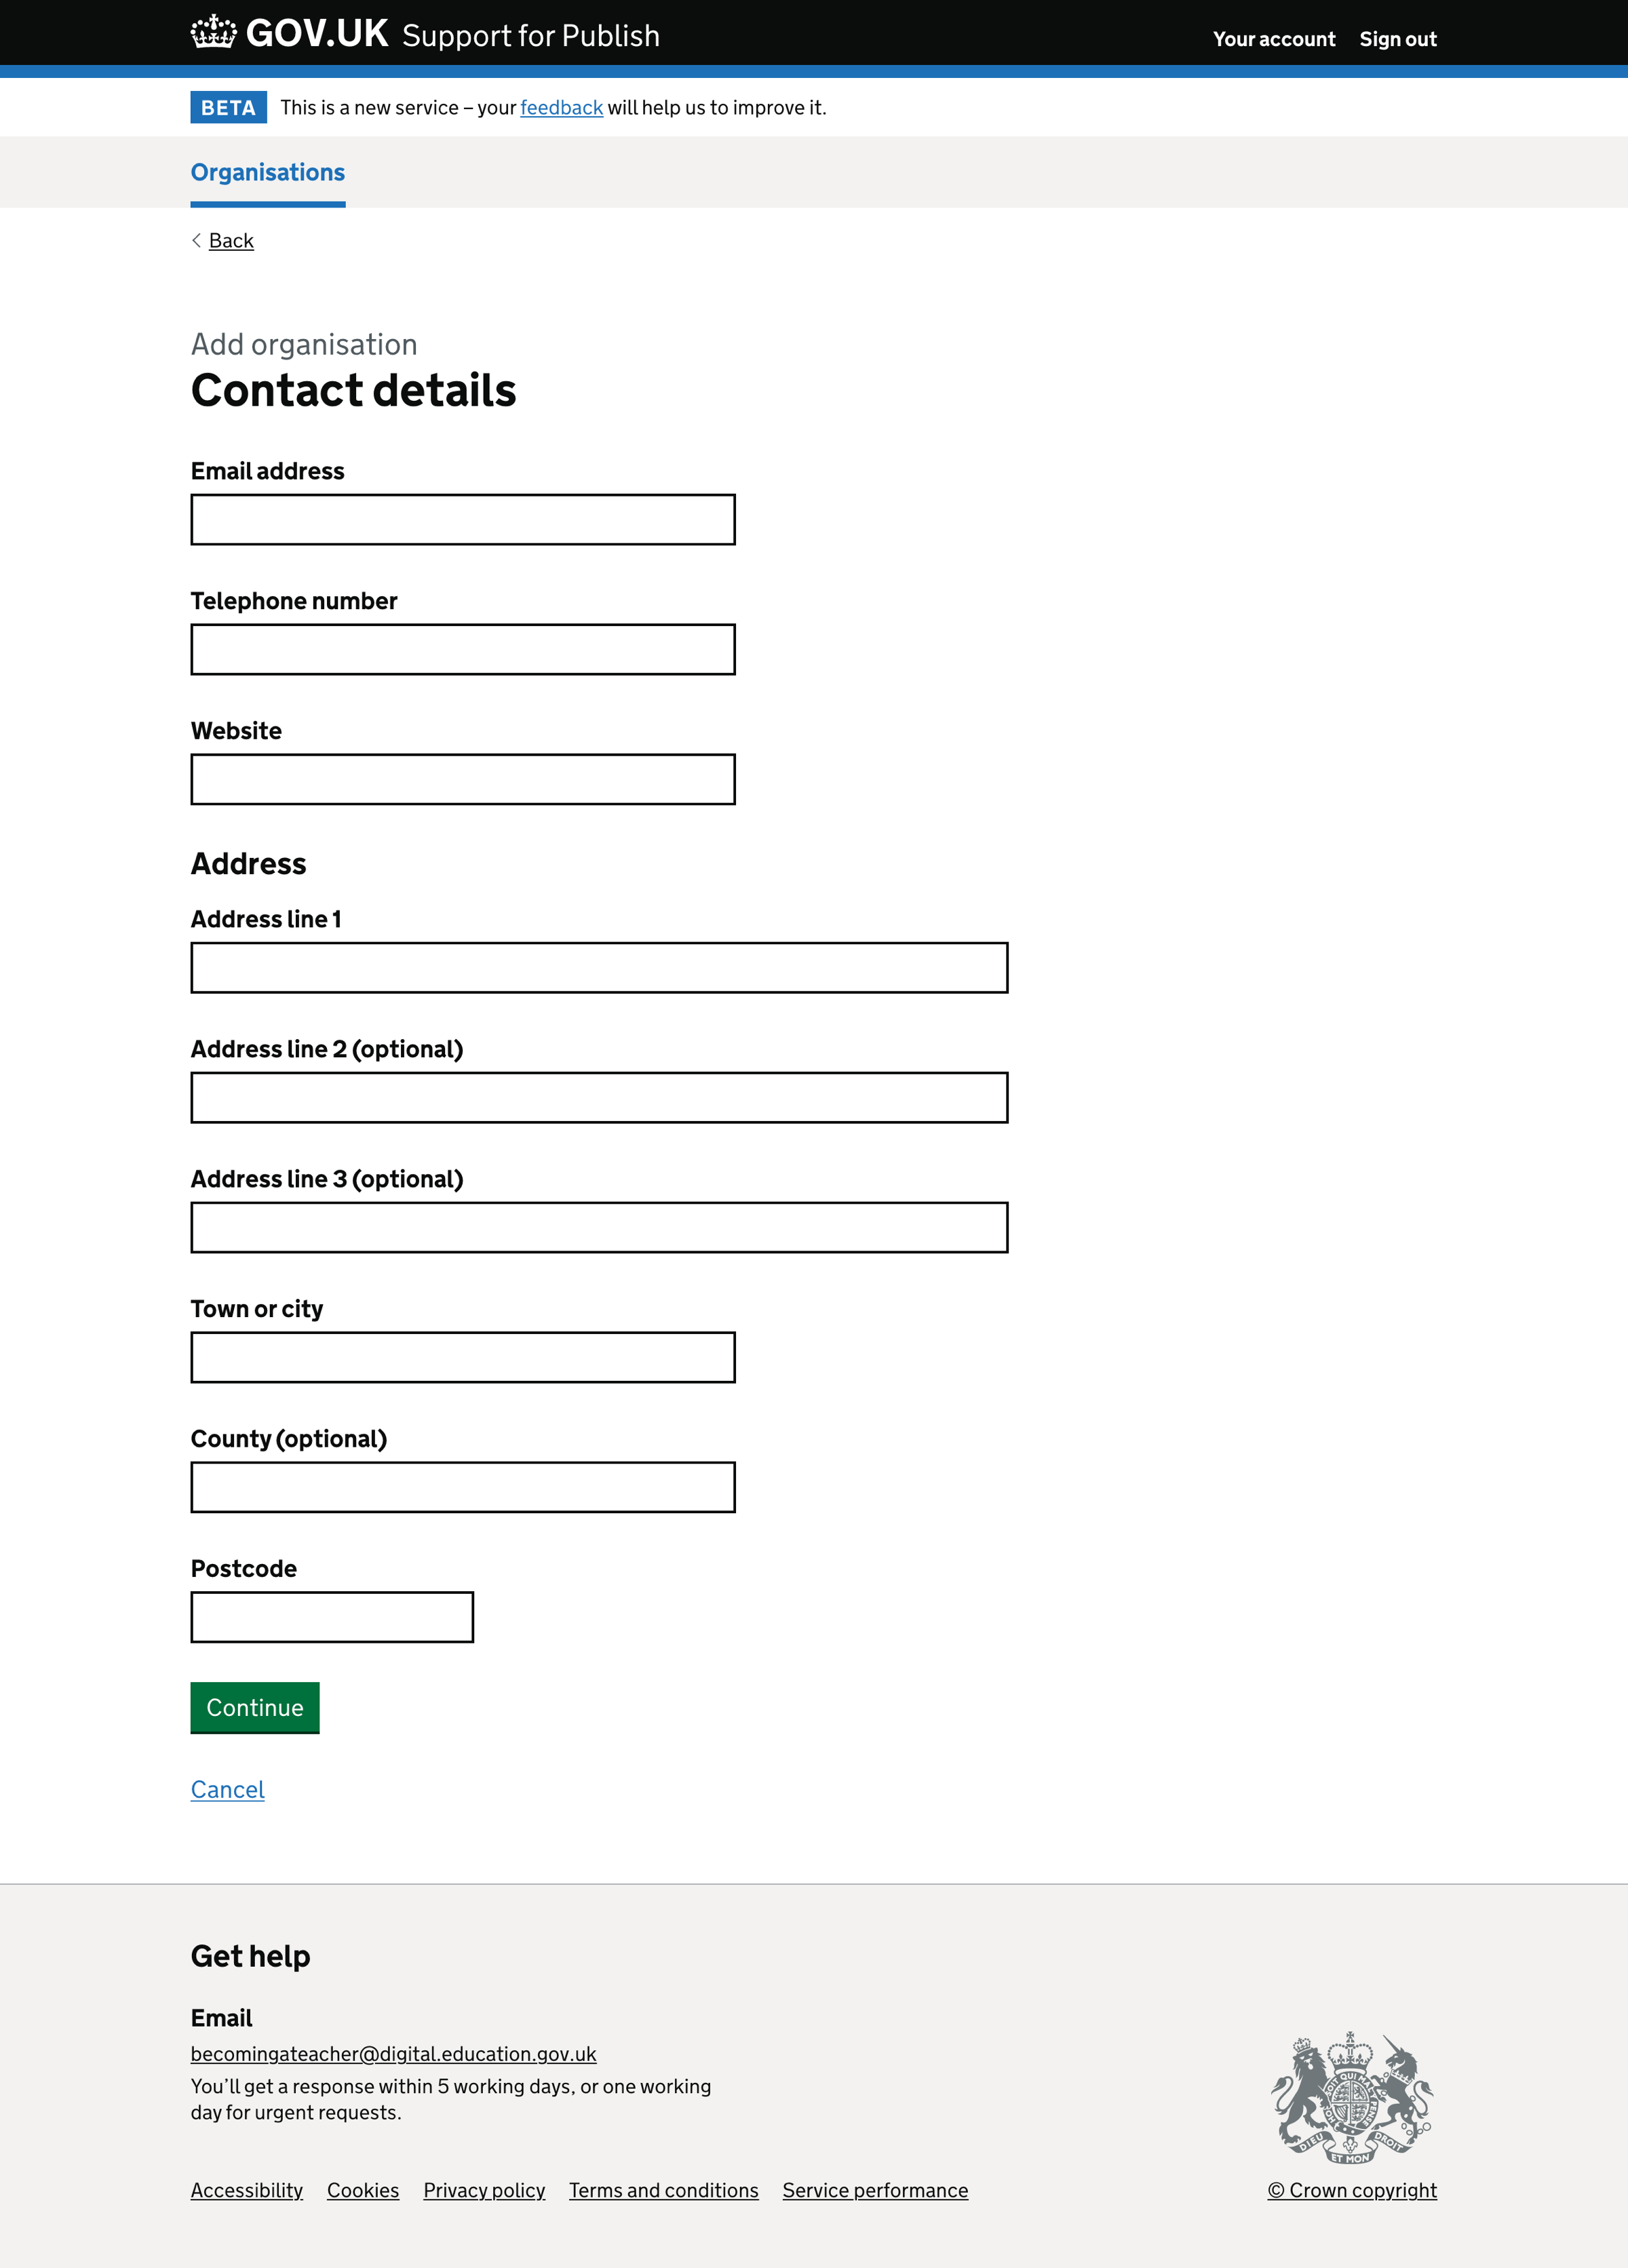 Screenshot of Add organisation contact details